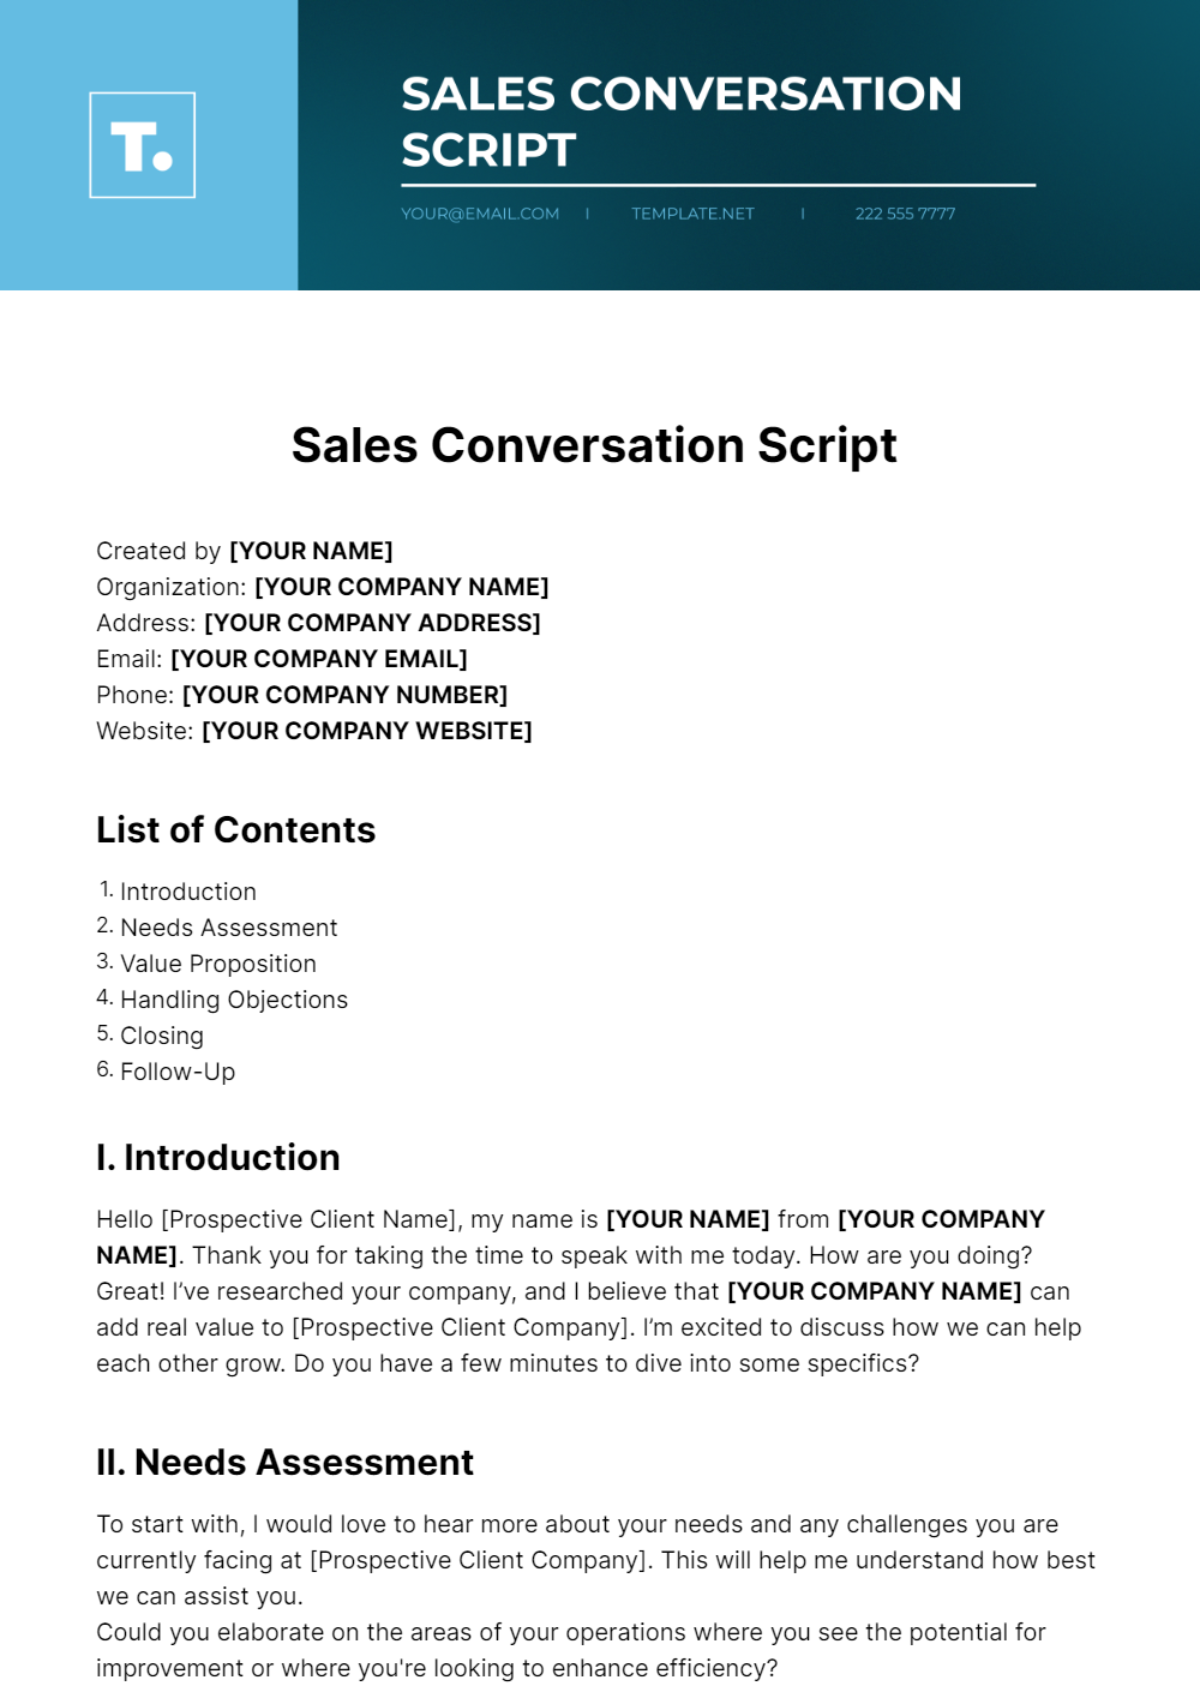 Sales Conversations Script Template